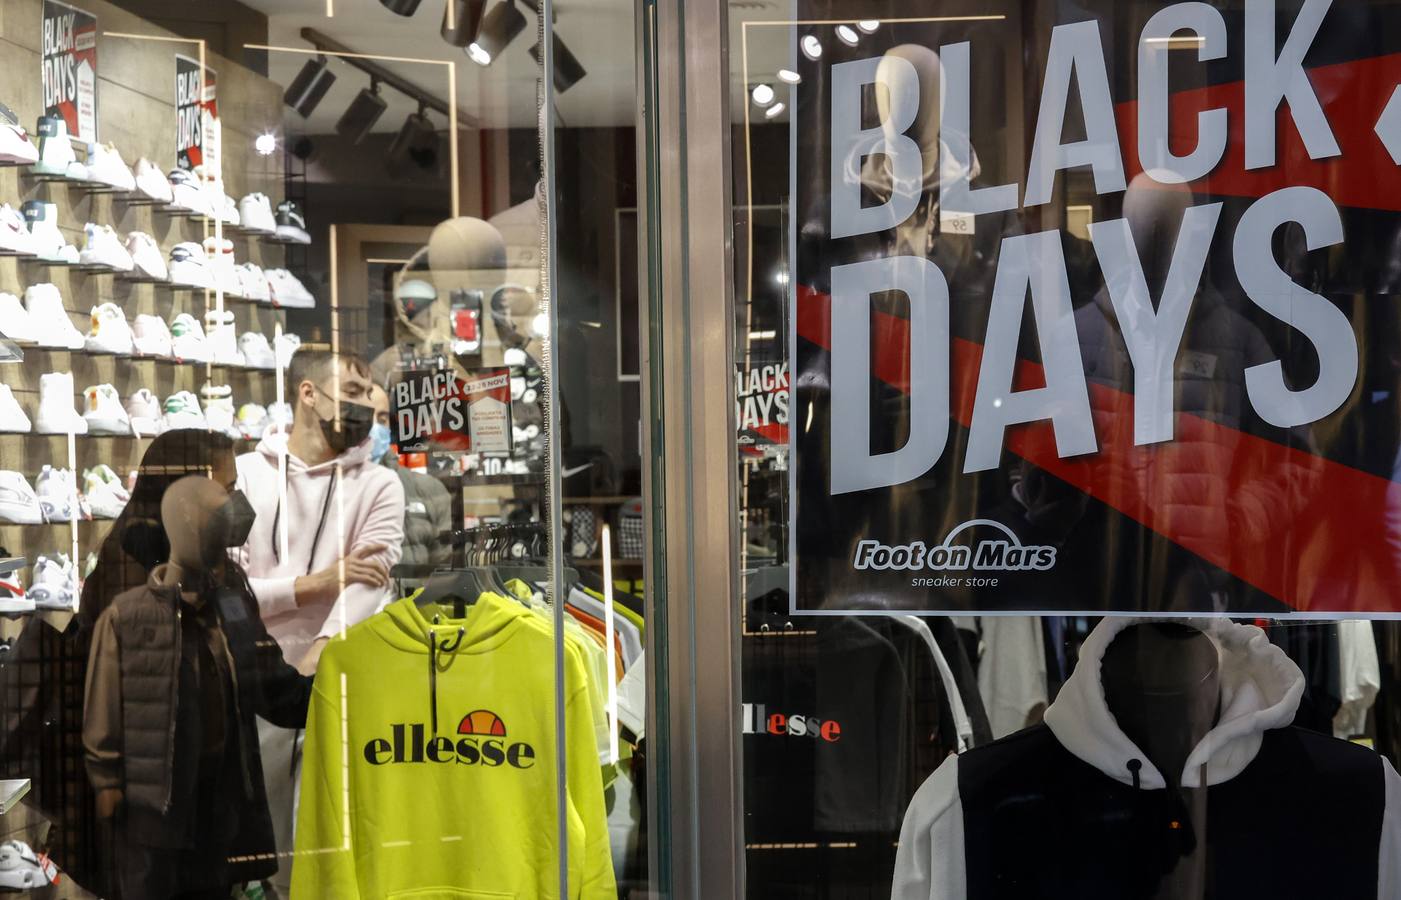 Black Friday 2021: Sevilla se tiñe de negro